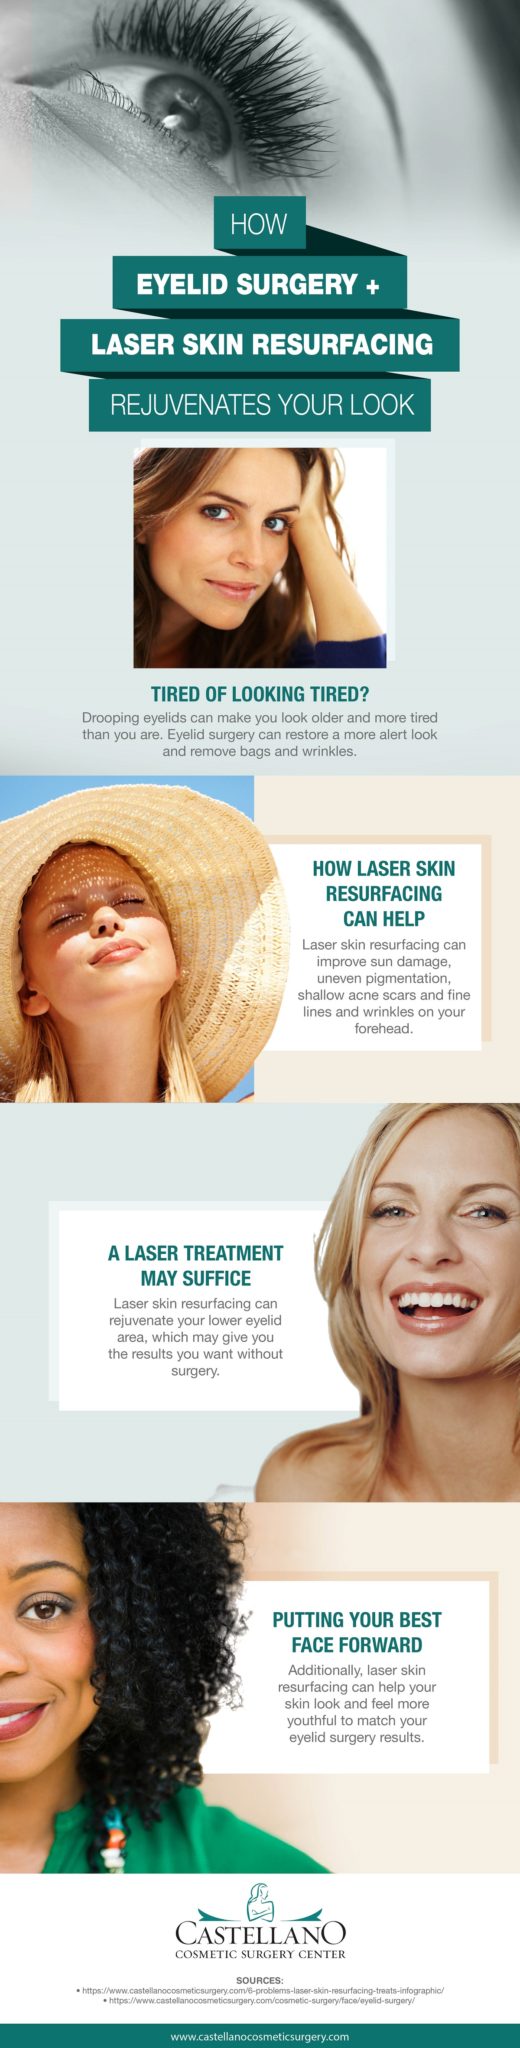 eyelid surgery co2 laser resurfacing infographic